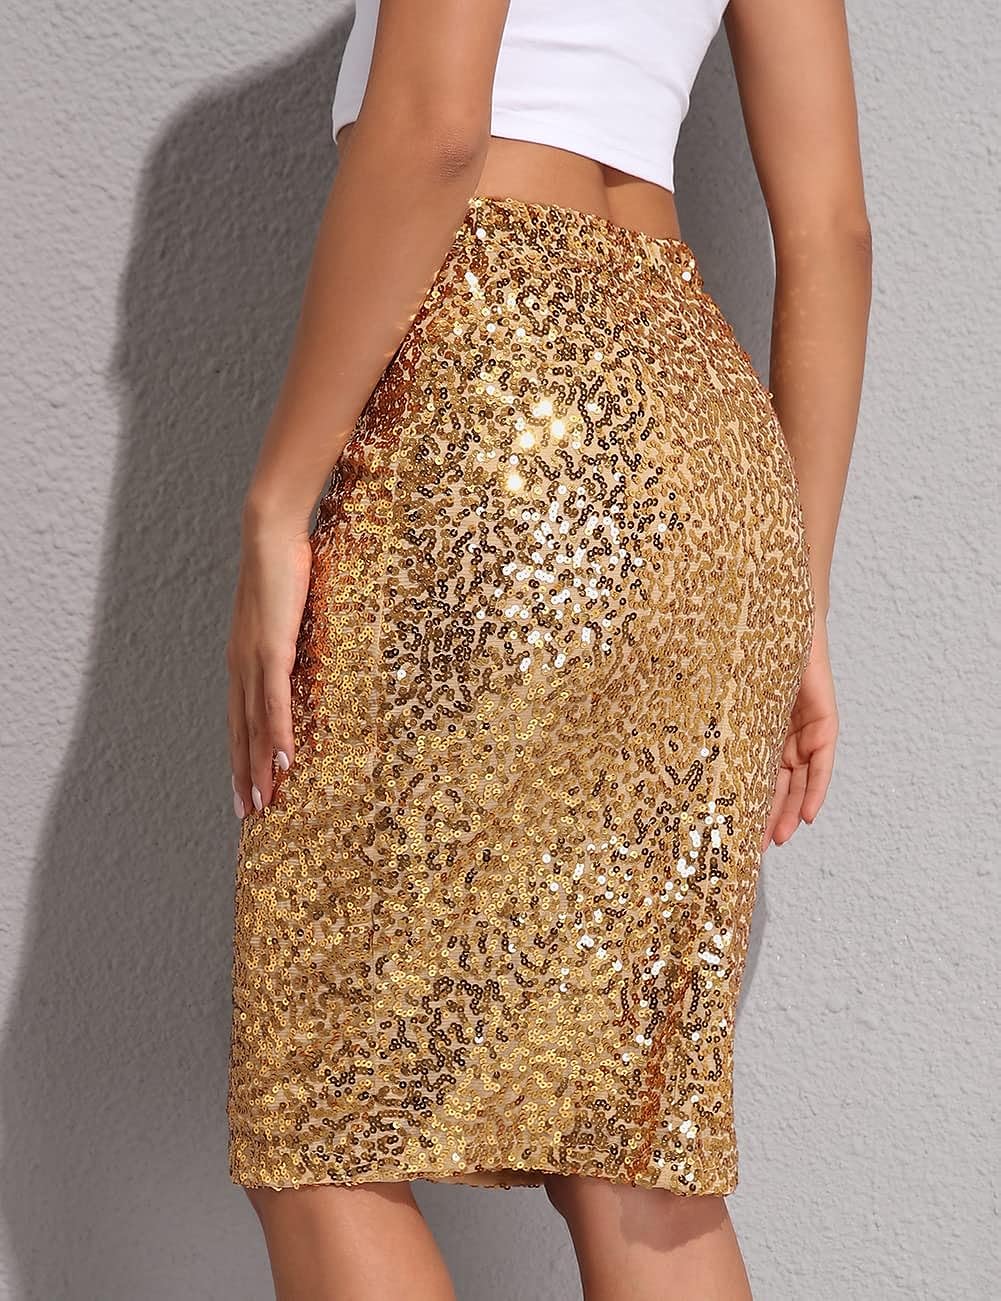 Designer Sequin Glitter White Silver Gold High Waist Pencil Skirt